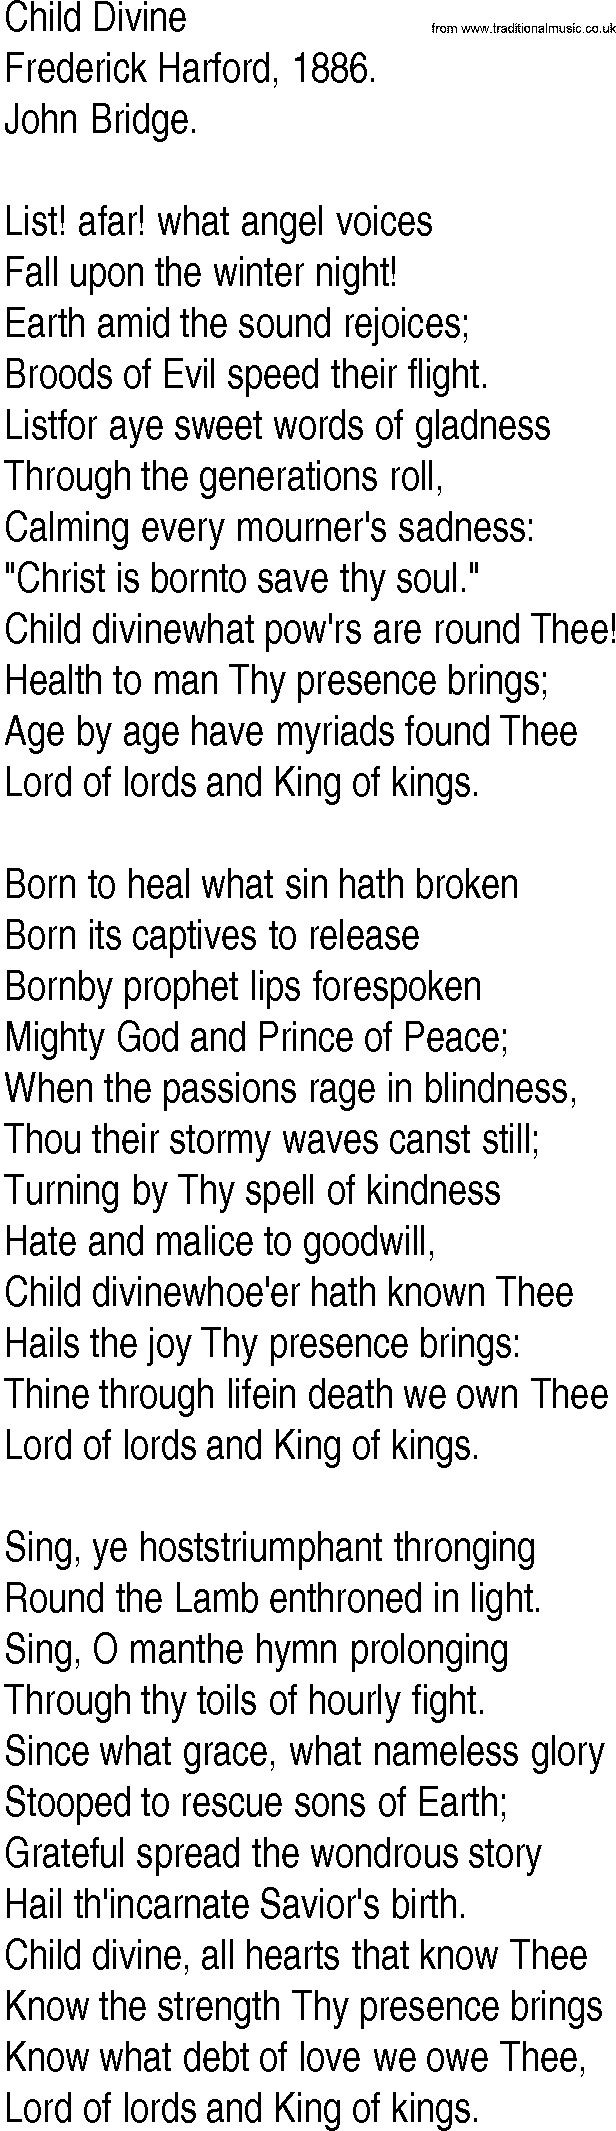 Hymn and Gospel Song: Child Divine by Frederick Harford lyrics